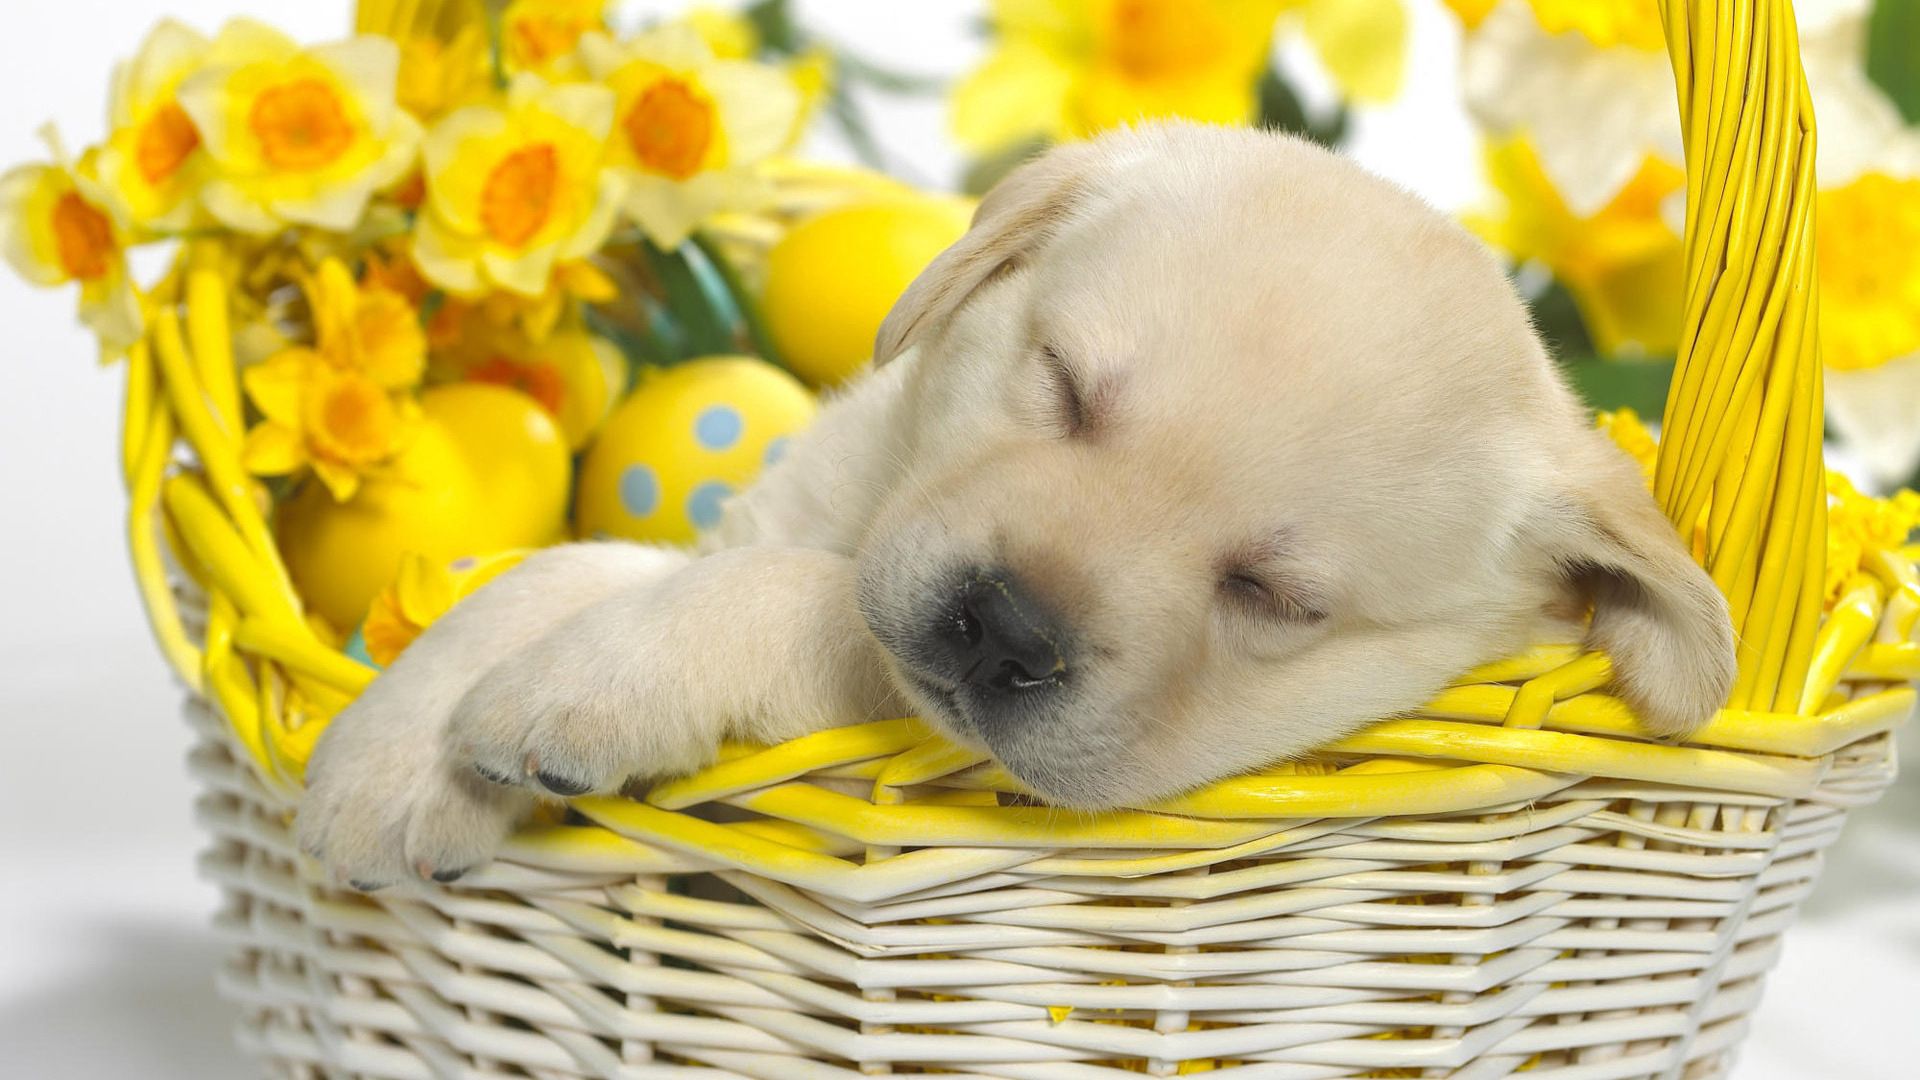 labrador, animals, flowers, eggs, easter, puppy, sleep, dream, basket